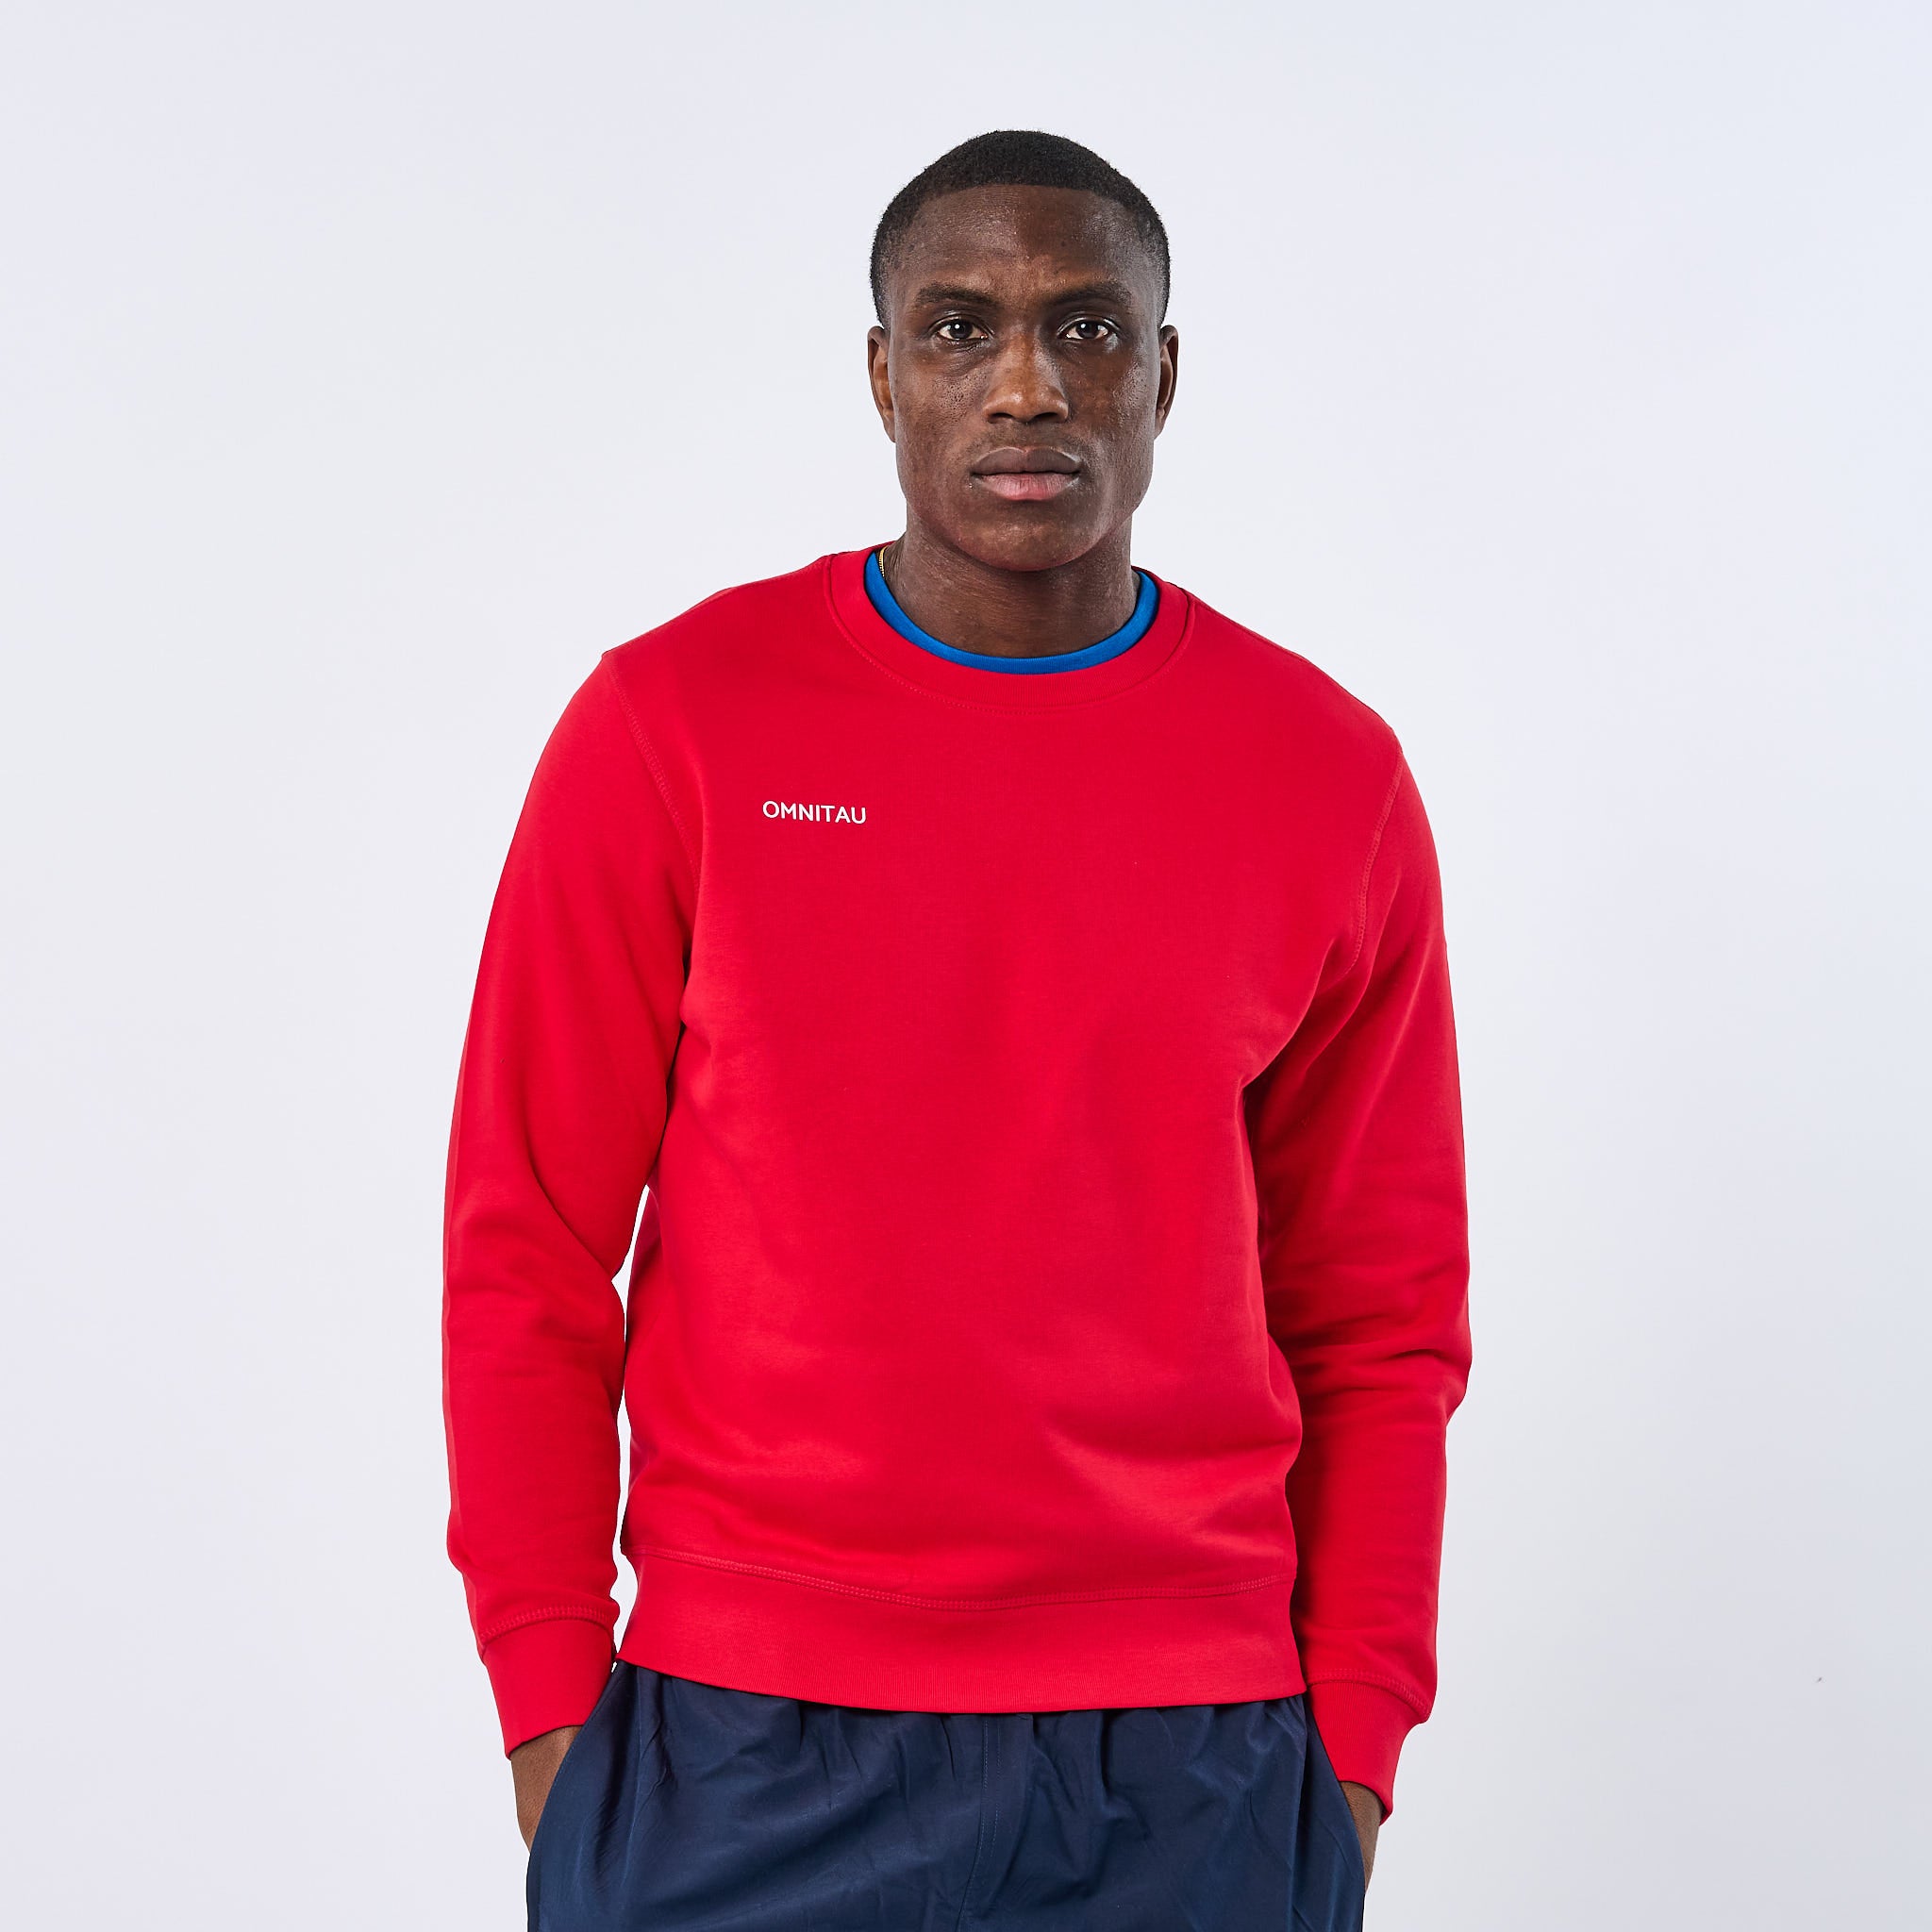 Omnitau Men's Team Sports Organic Cotton Sweatshirt - Red